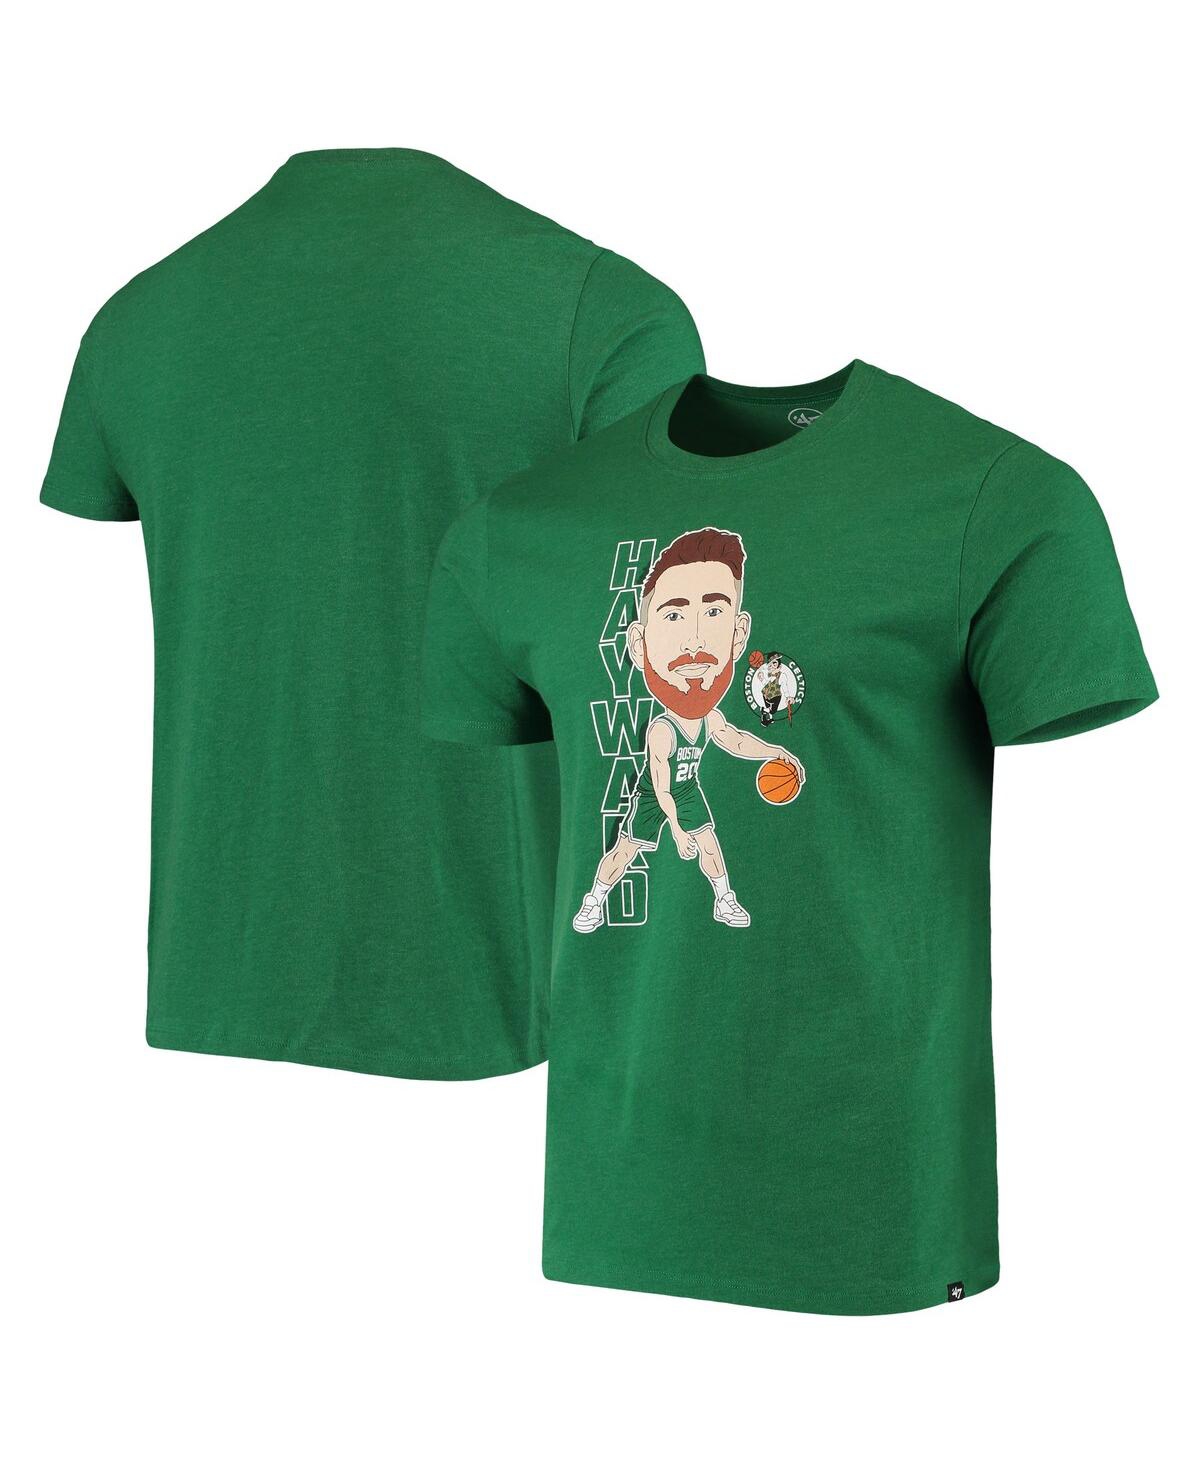 Men's '47 Gordon Hayward Heathered Kelly Green Boston Celtics Bobblehead T-shirt - Green